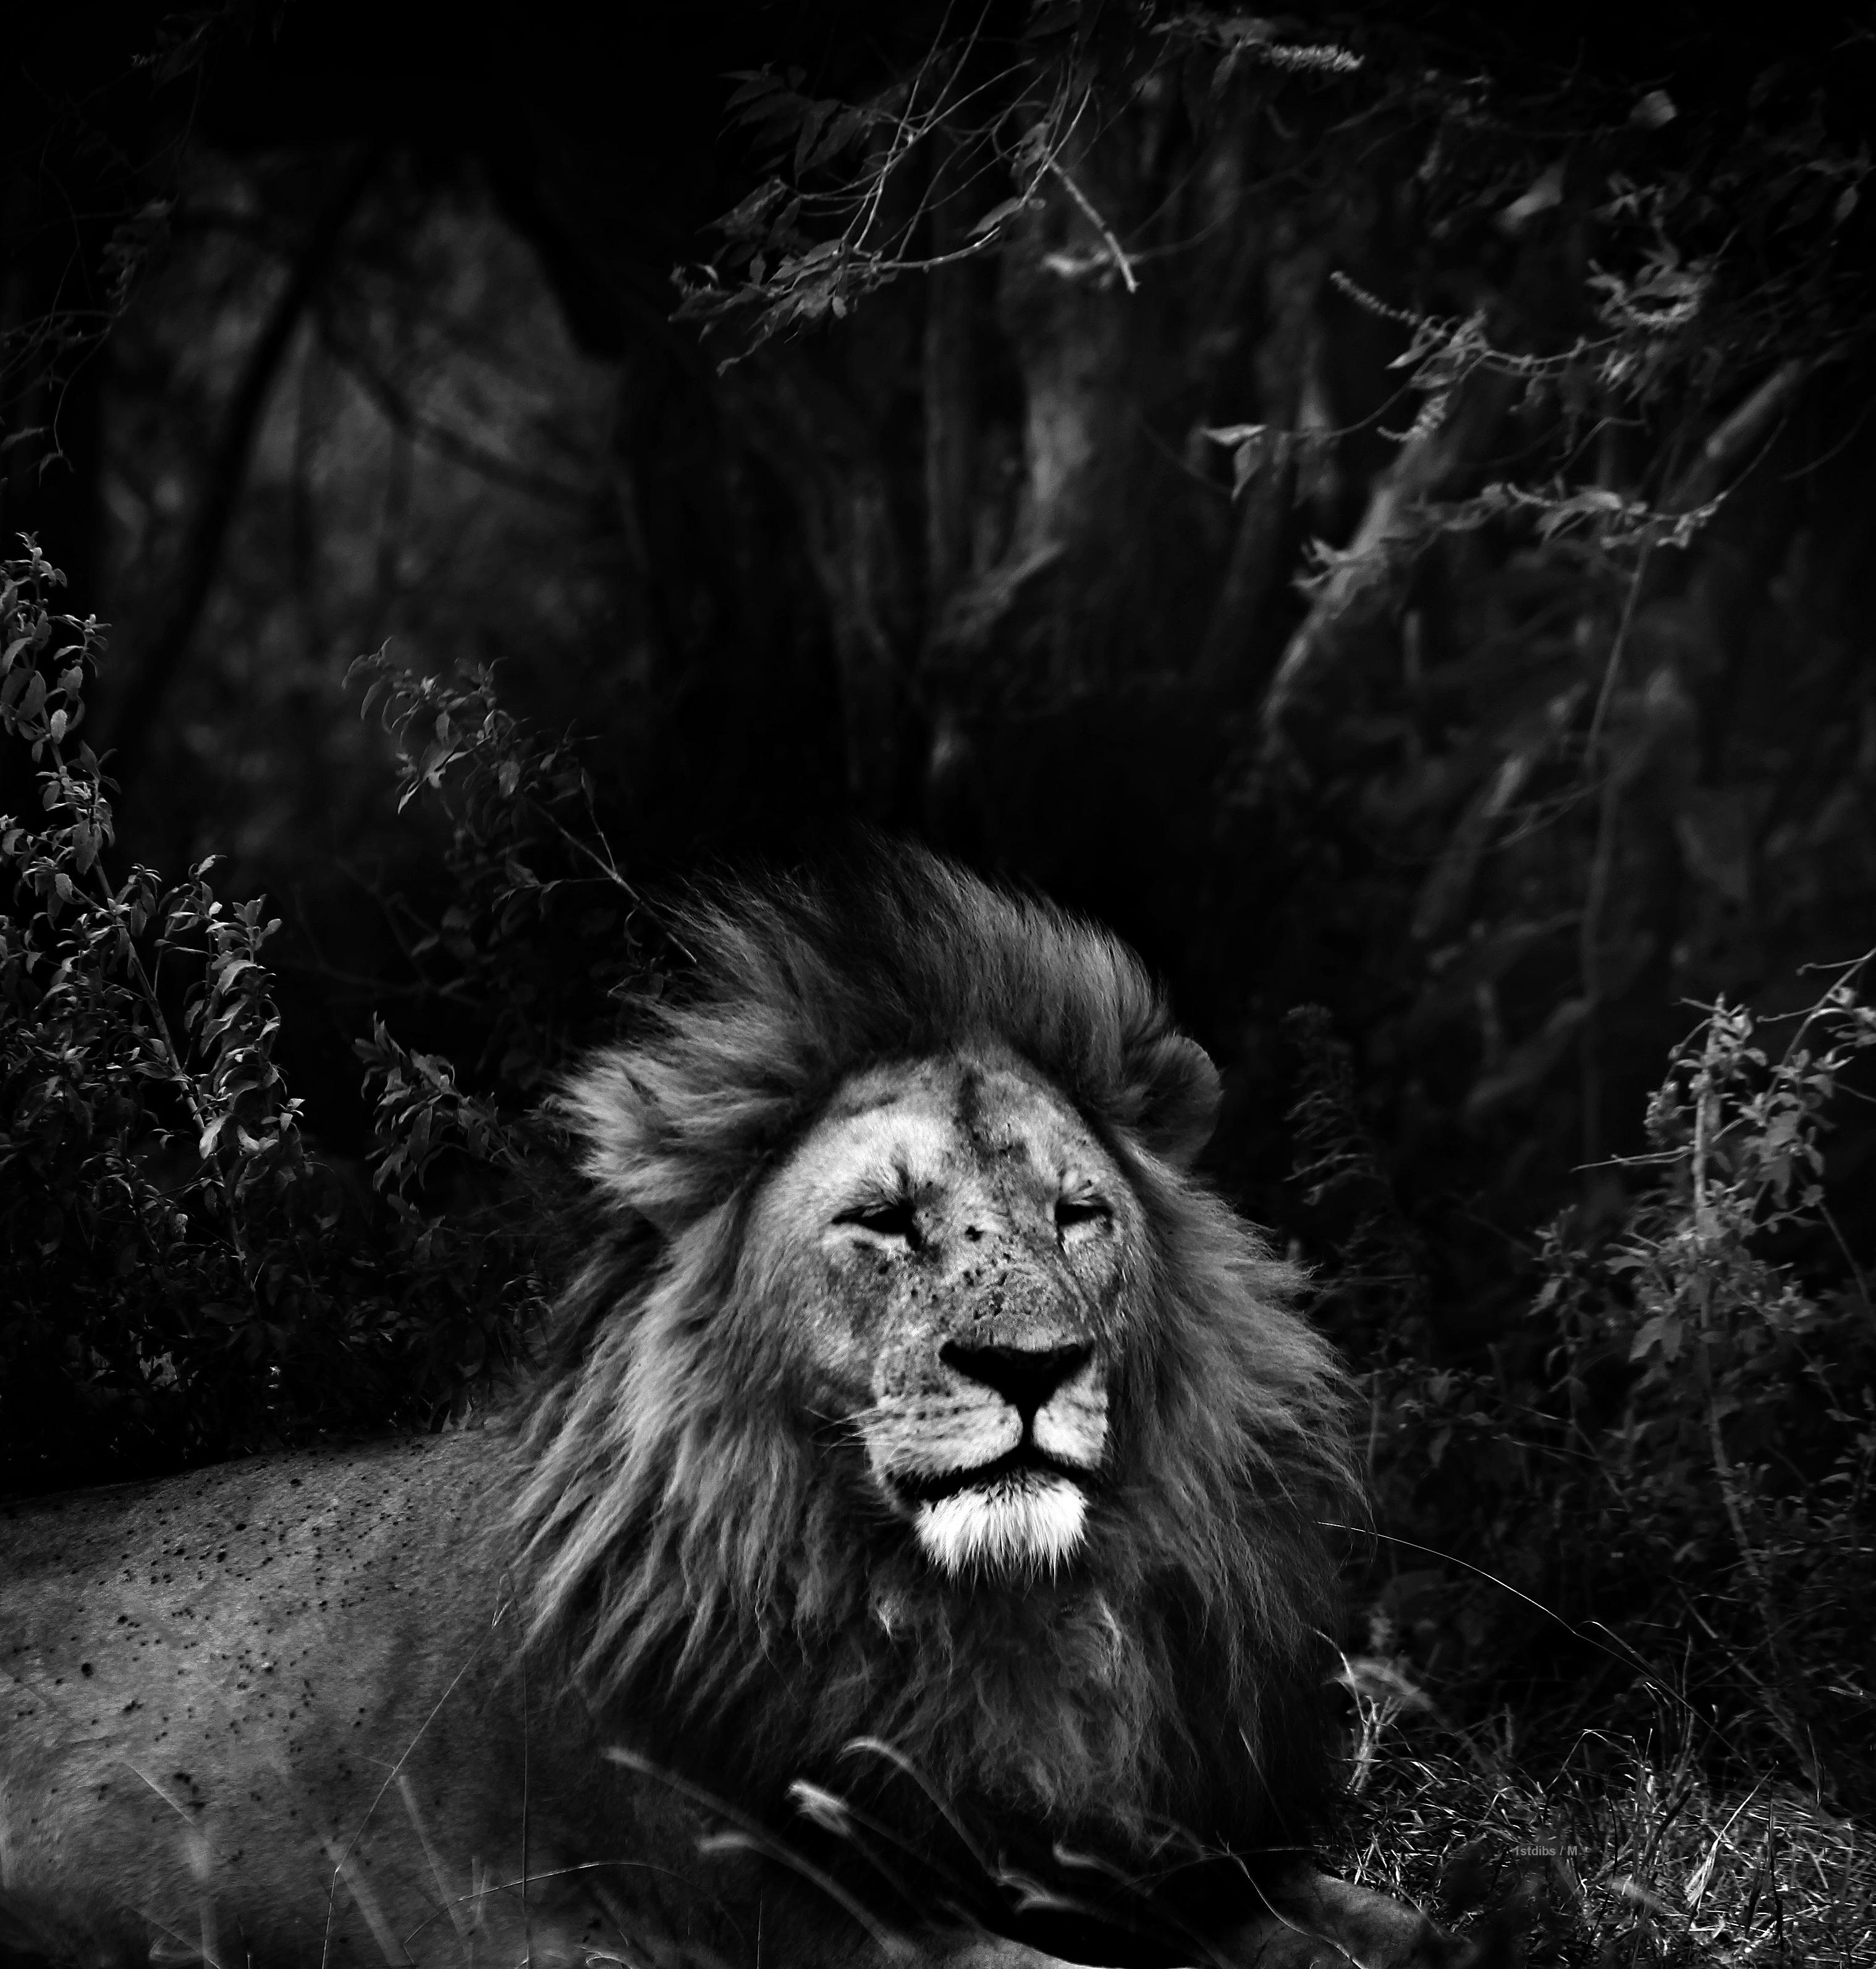 Wildlife - "Lion" award winning photo 24 x 23 in. Fuji Flex premium 